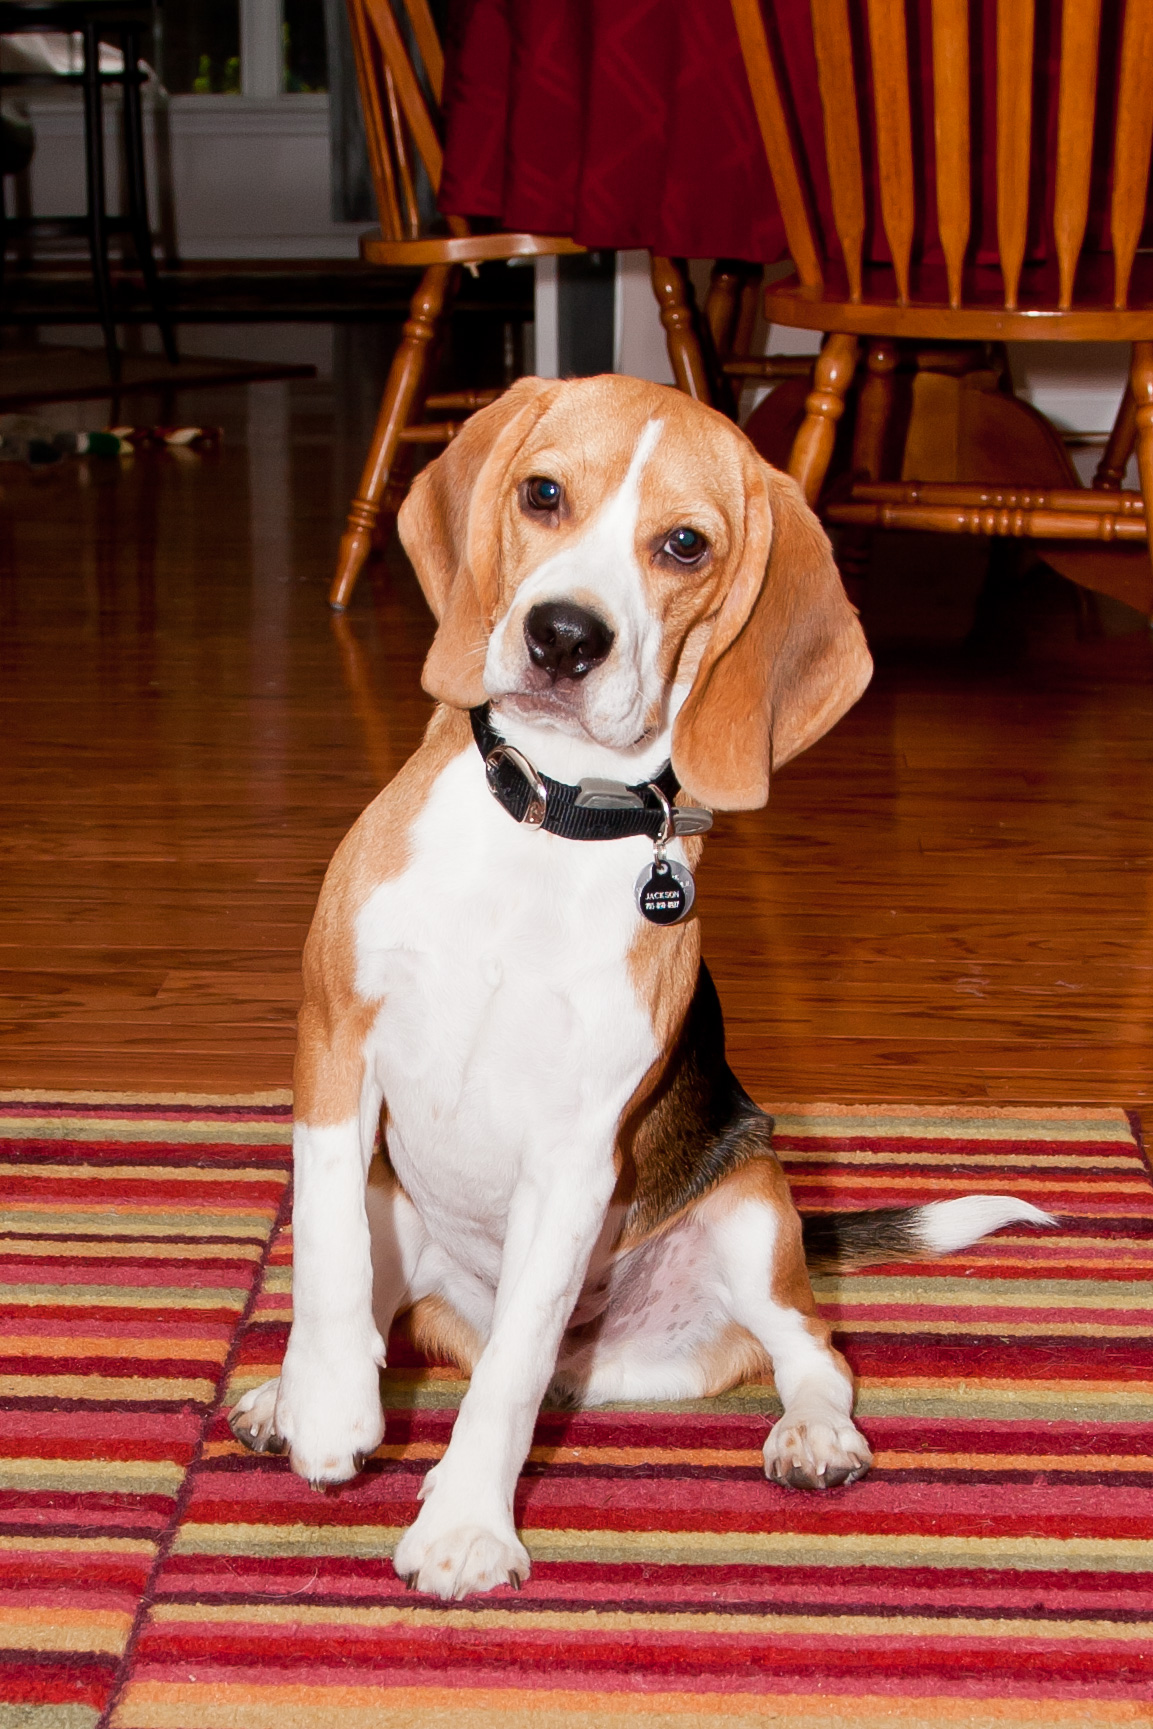 Jackson the Beagle